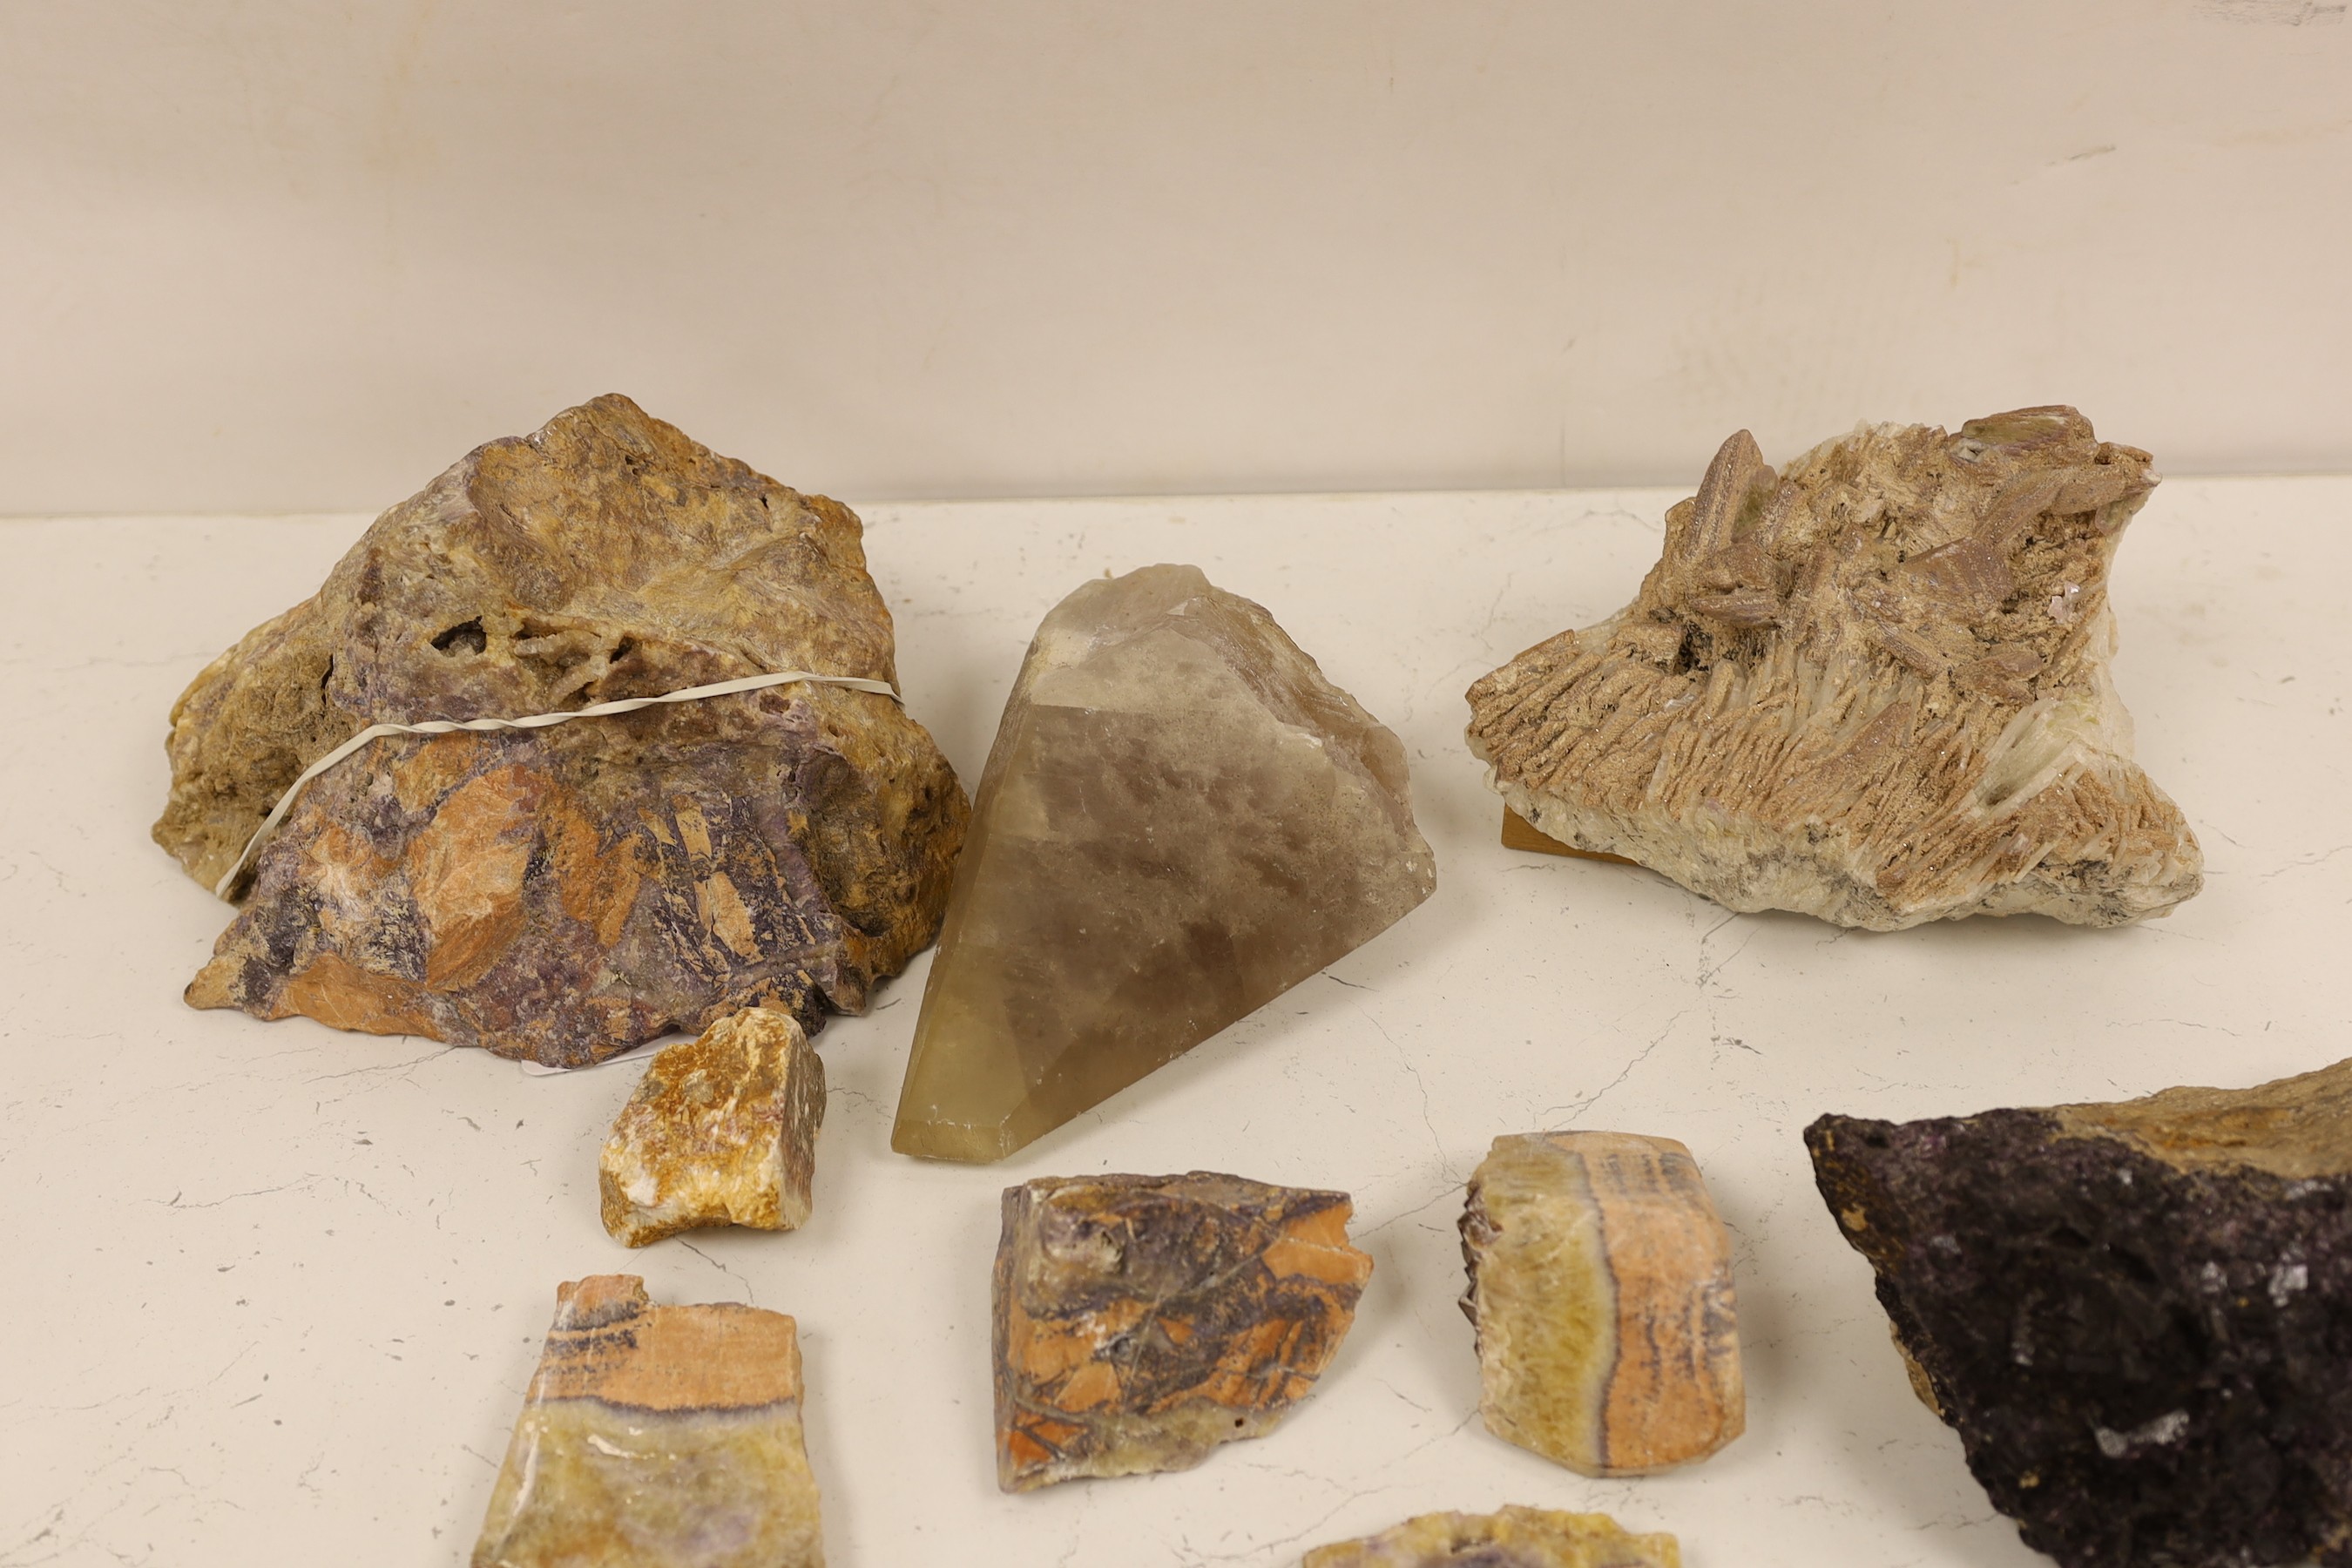 A large amethyst quartz in white, quartz matrix, other similar fragments and petrified wood, etc.